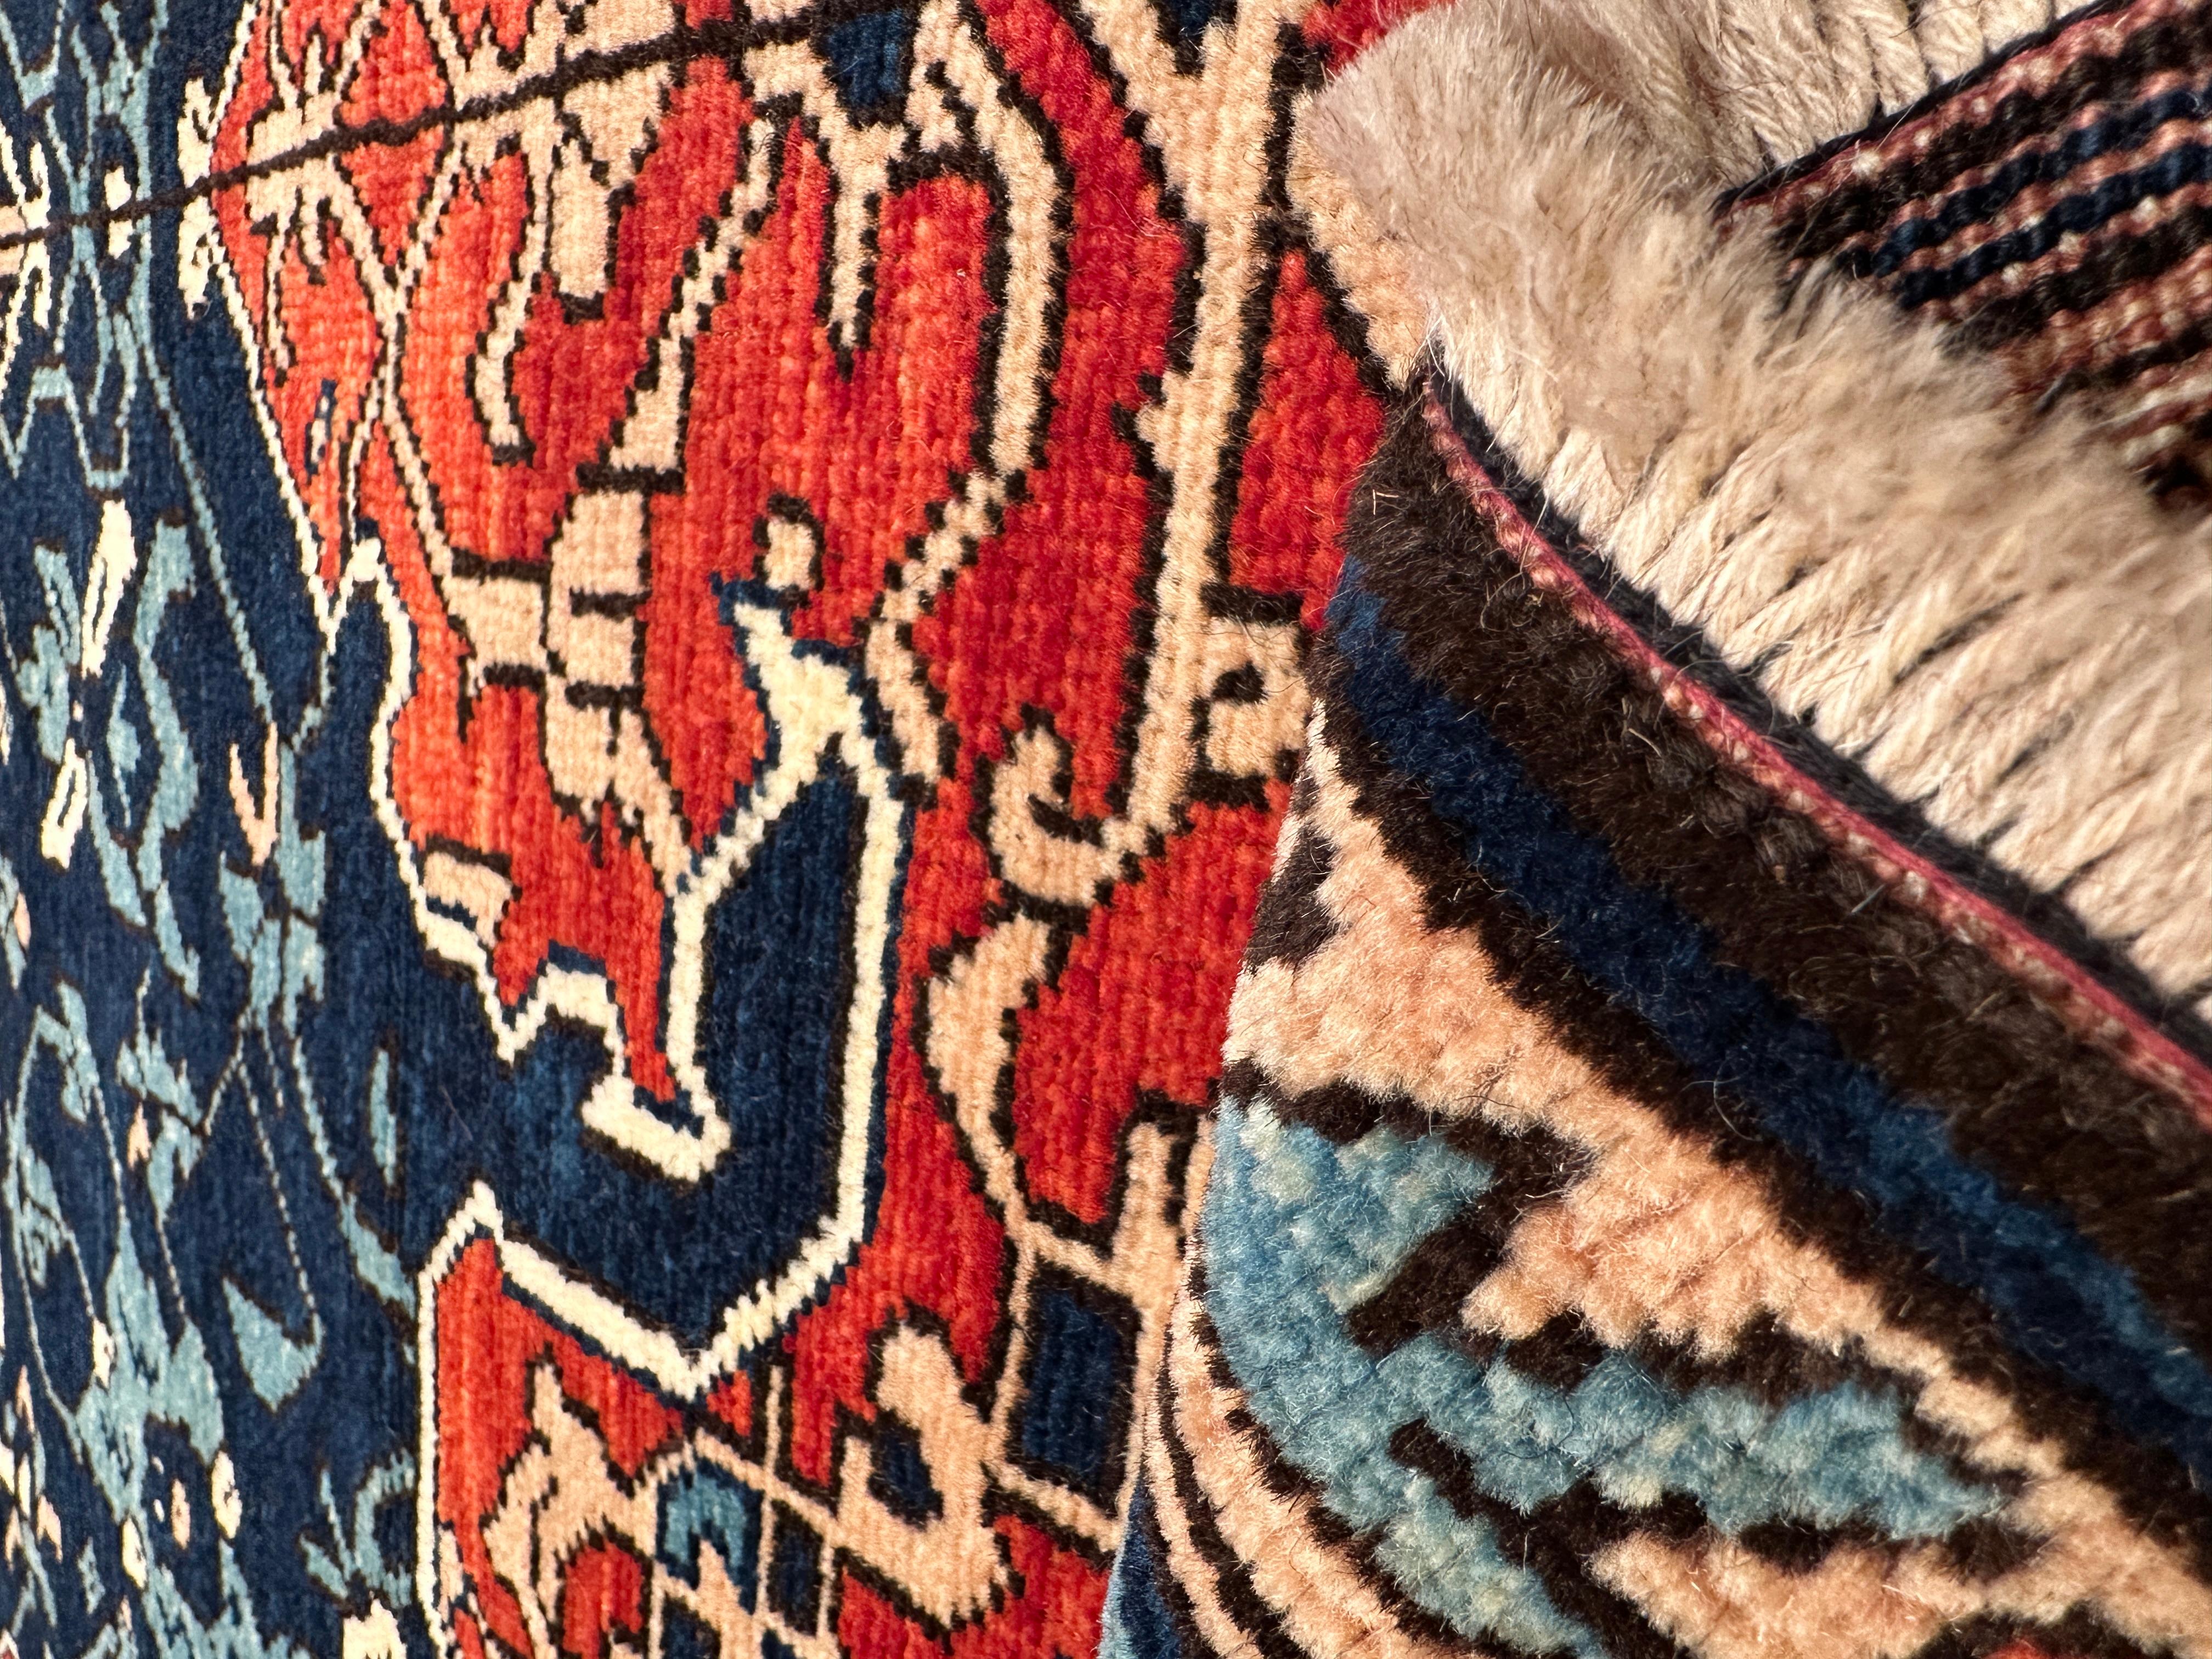 Turkish Ararat Rugs Star Ushak Carpet 16th Century Museum Piece Revival Rug Natural Dyed For Sale